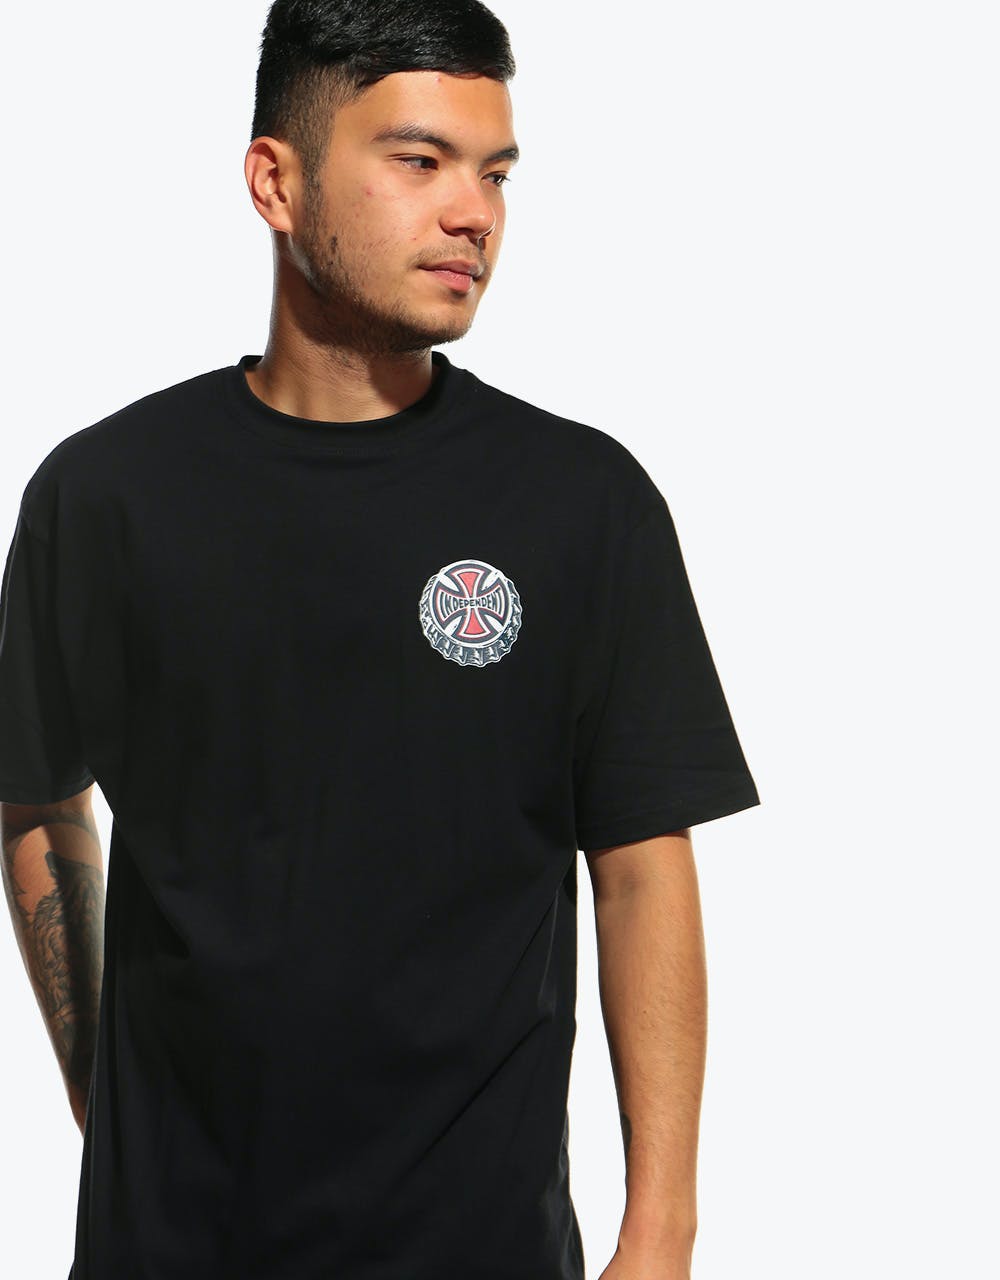 Independent Suds T-Shirt - Black